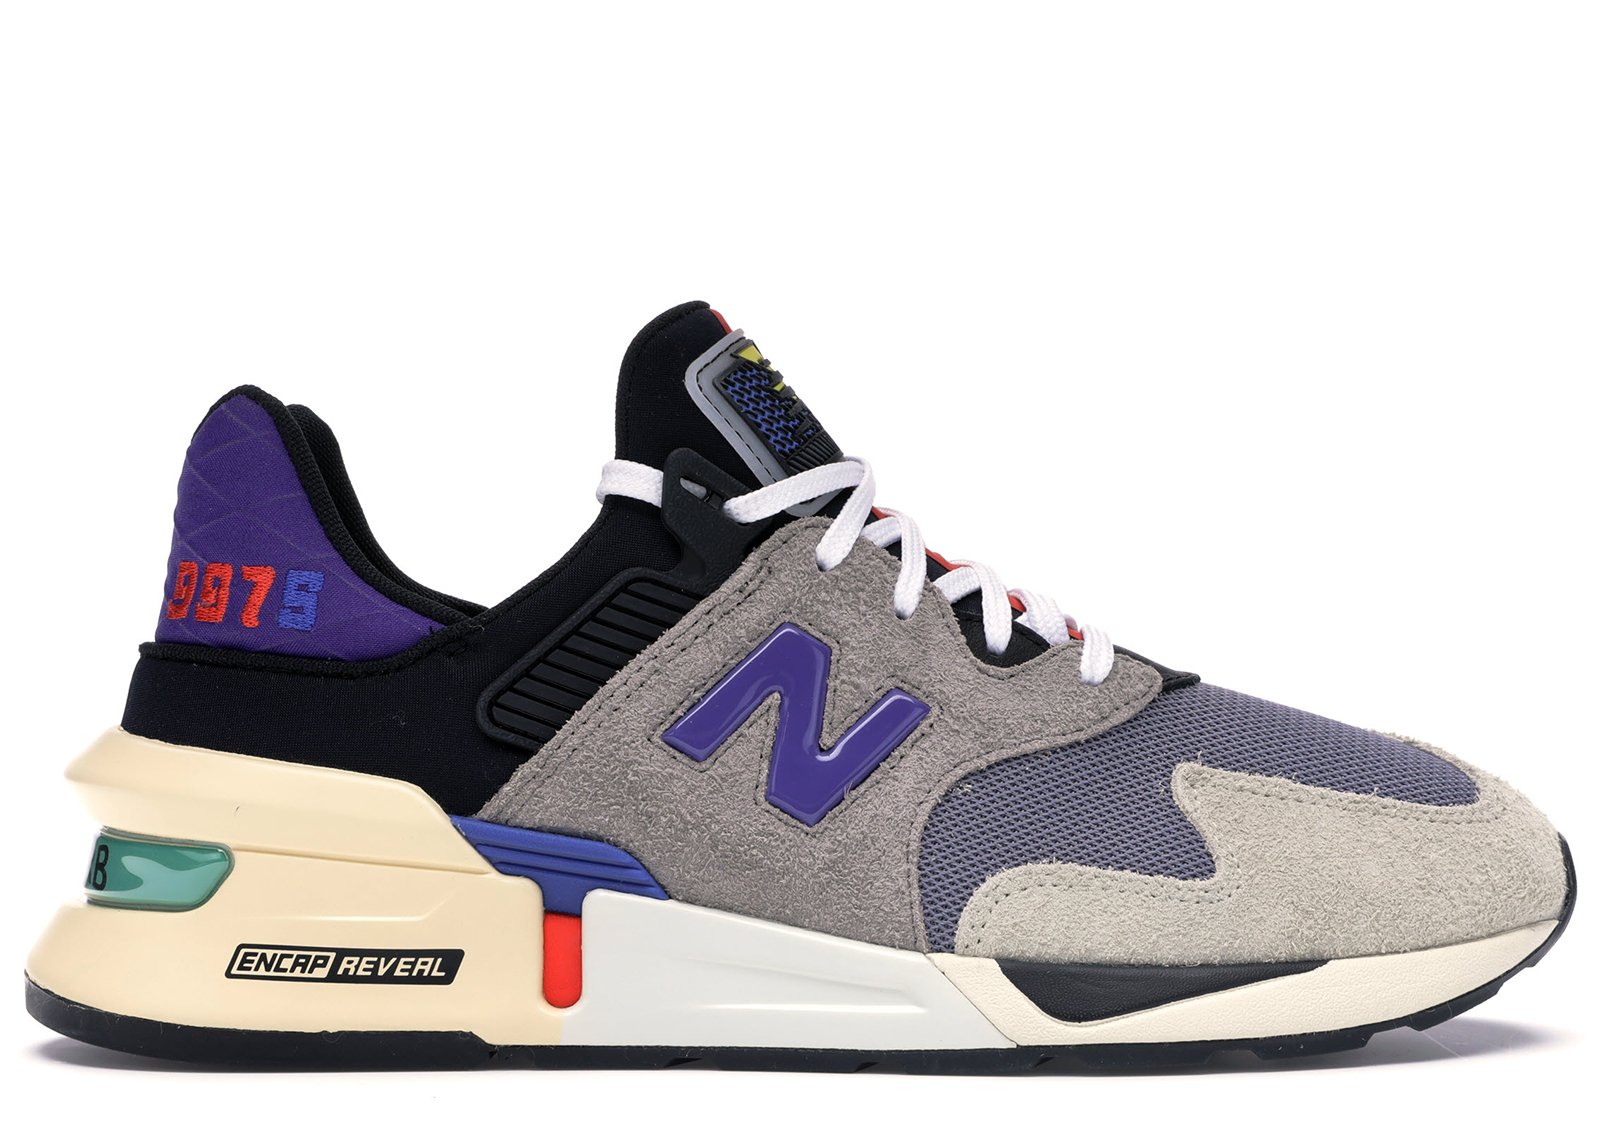 New Balance 997S Bodega sneakers